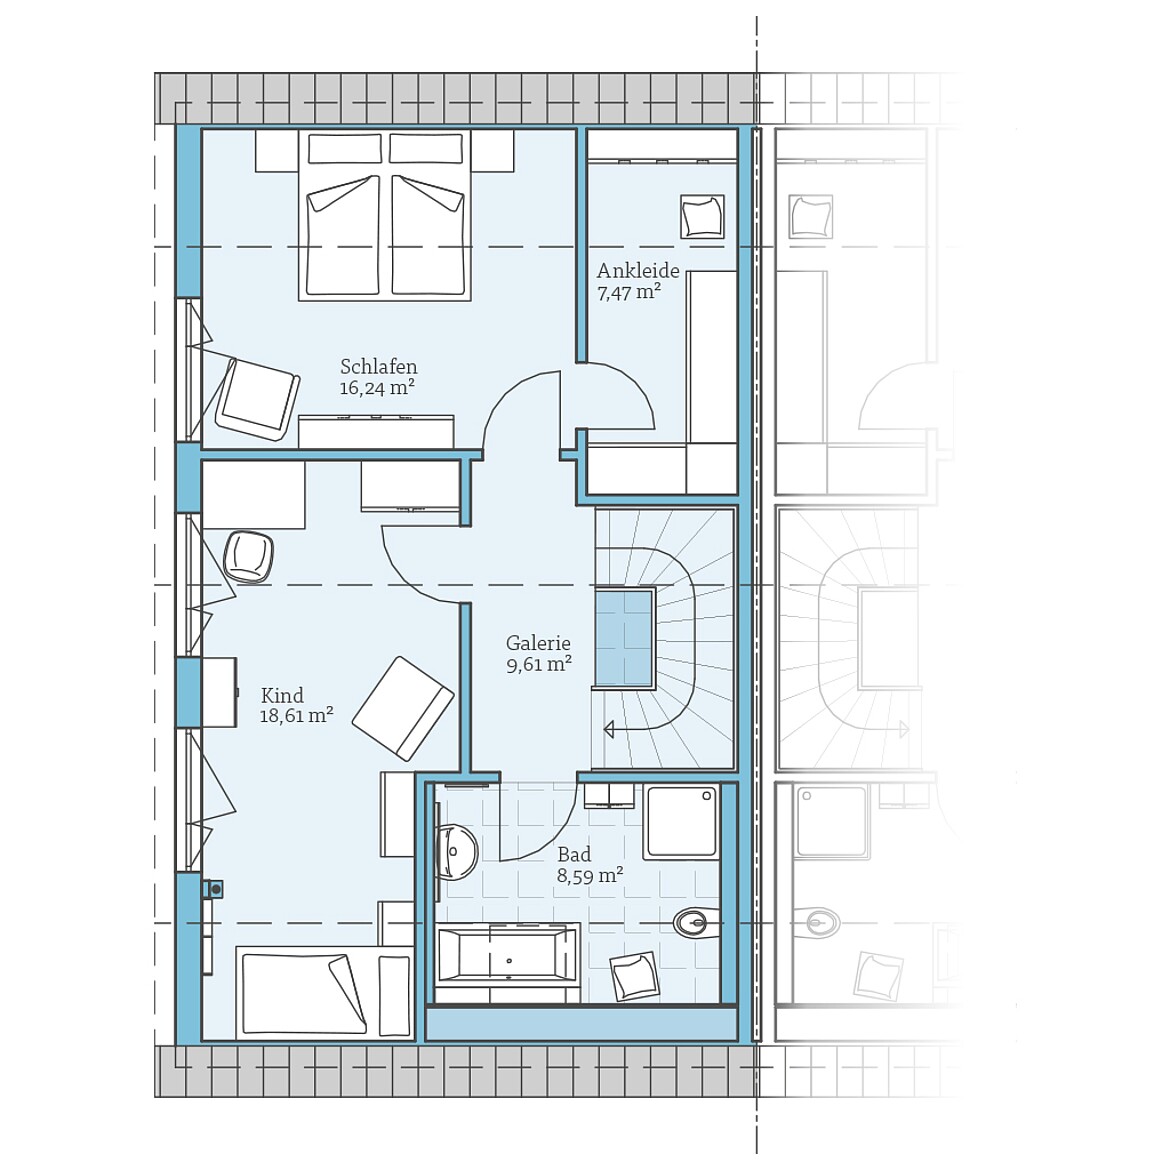 Prefabricated semi-detached house 35-124: Top floor plan